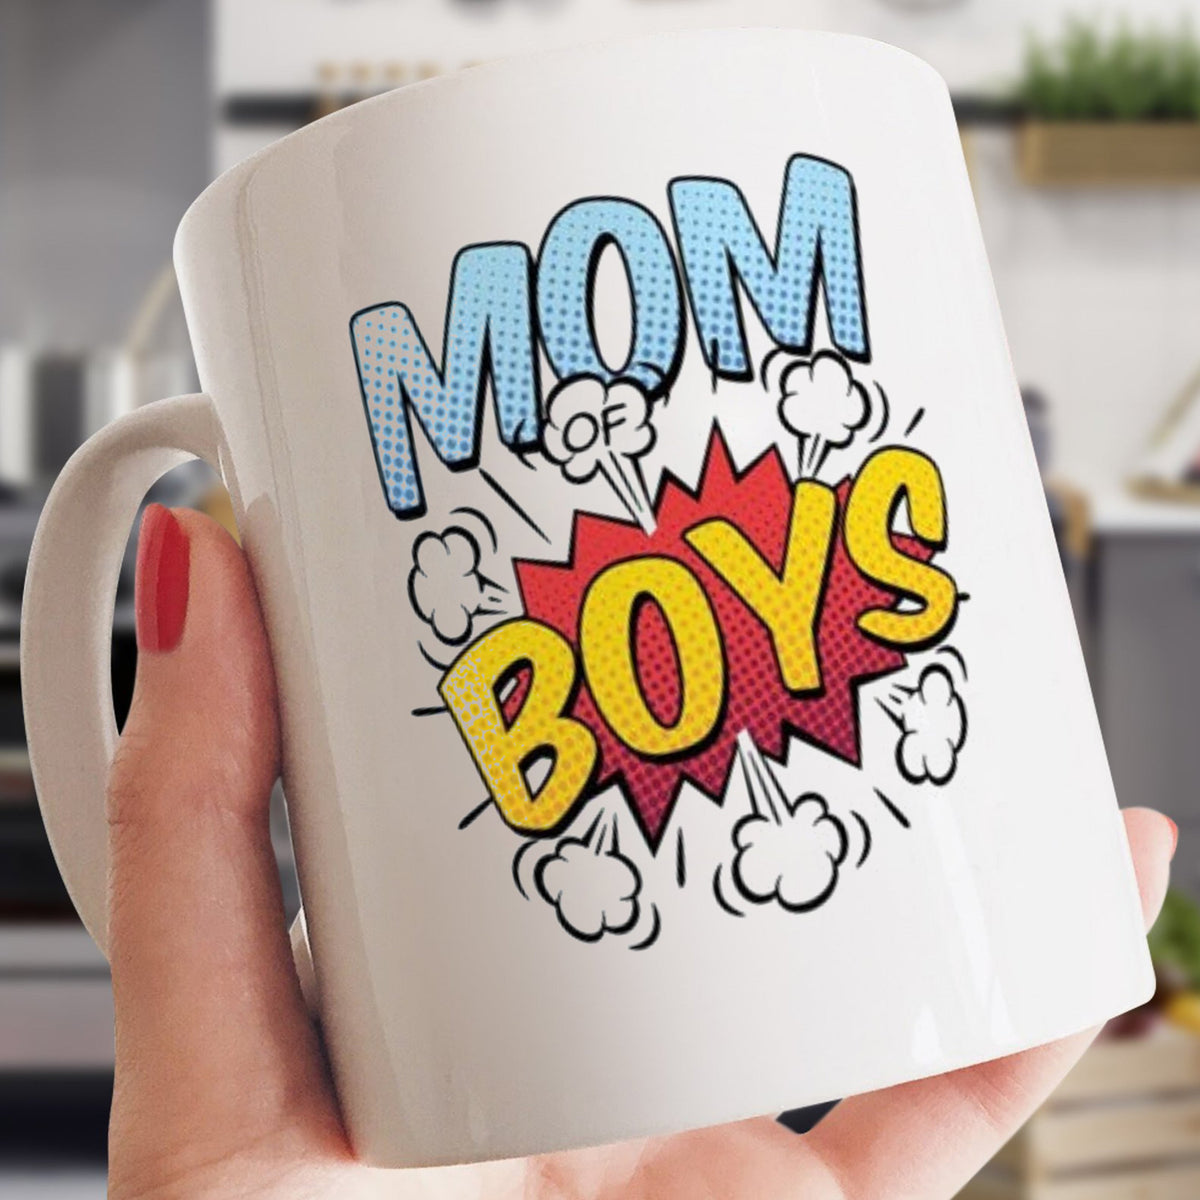 Coffee Mug  Boy Mom – Urban Trends Boutique